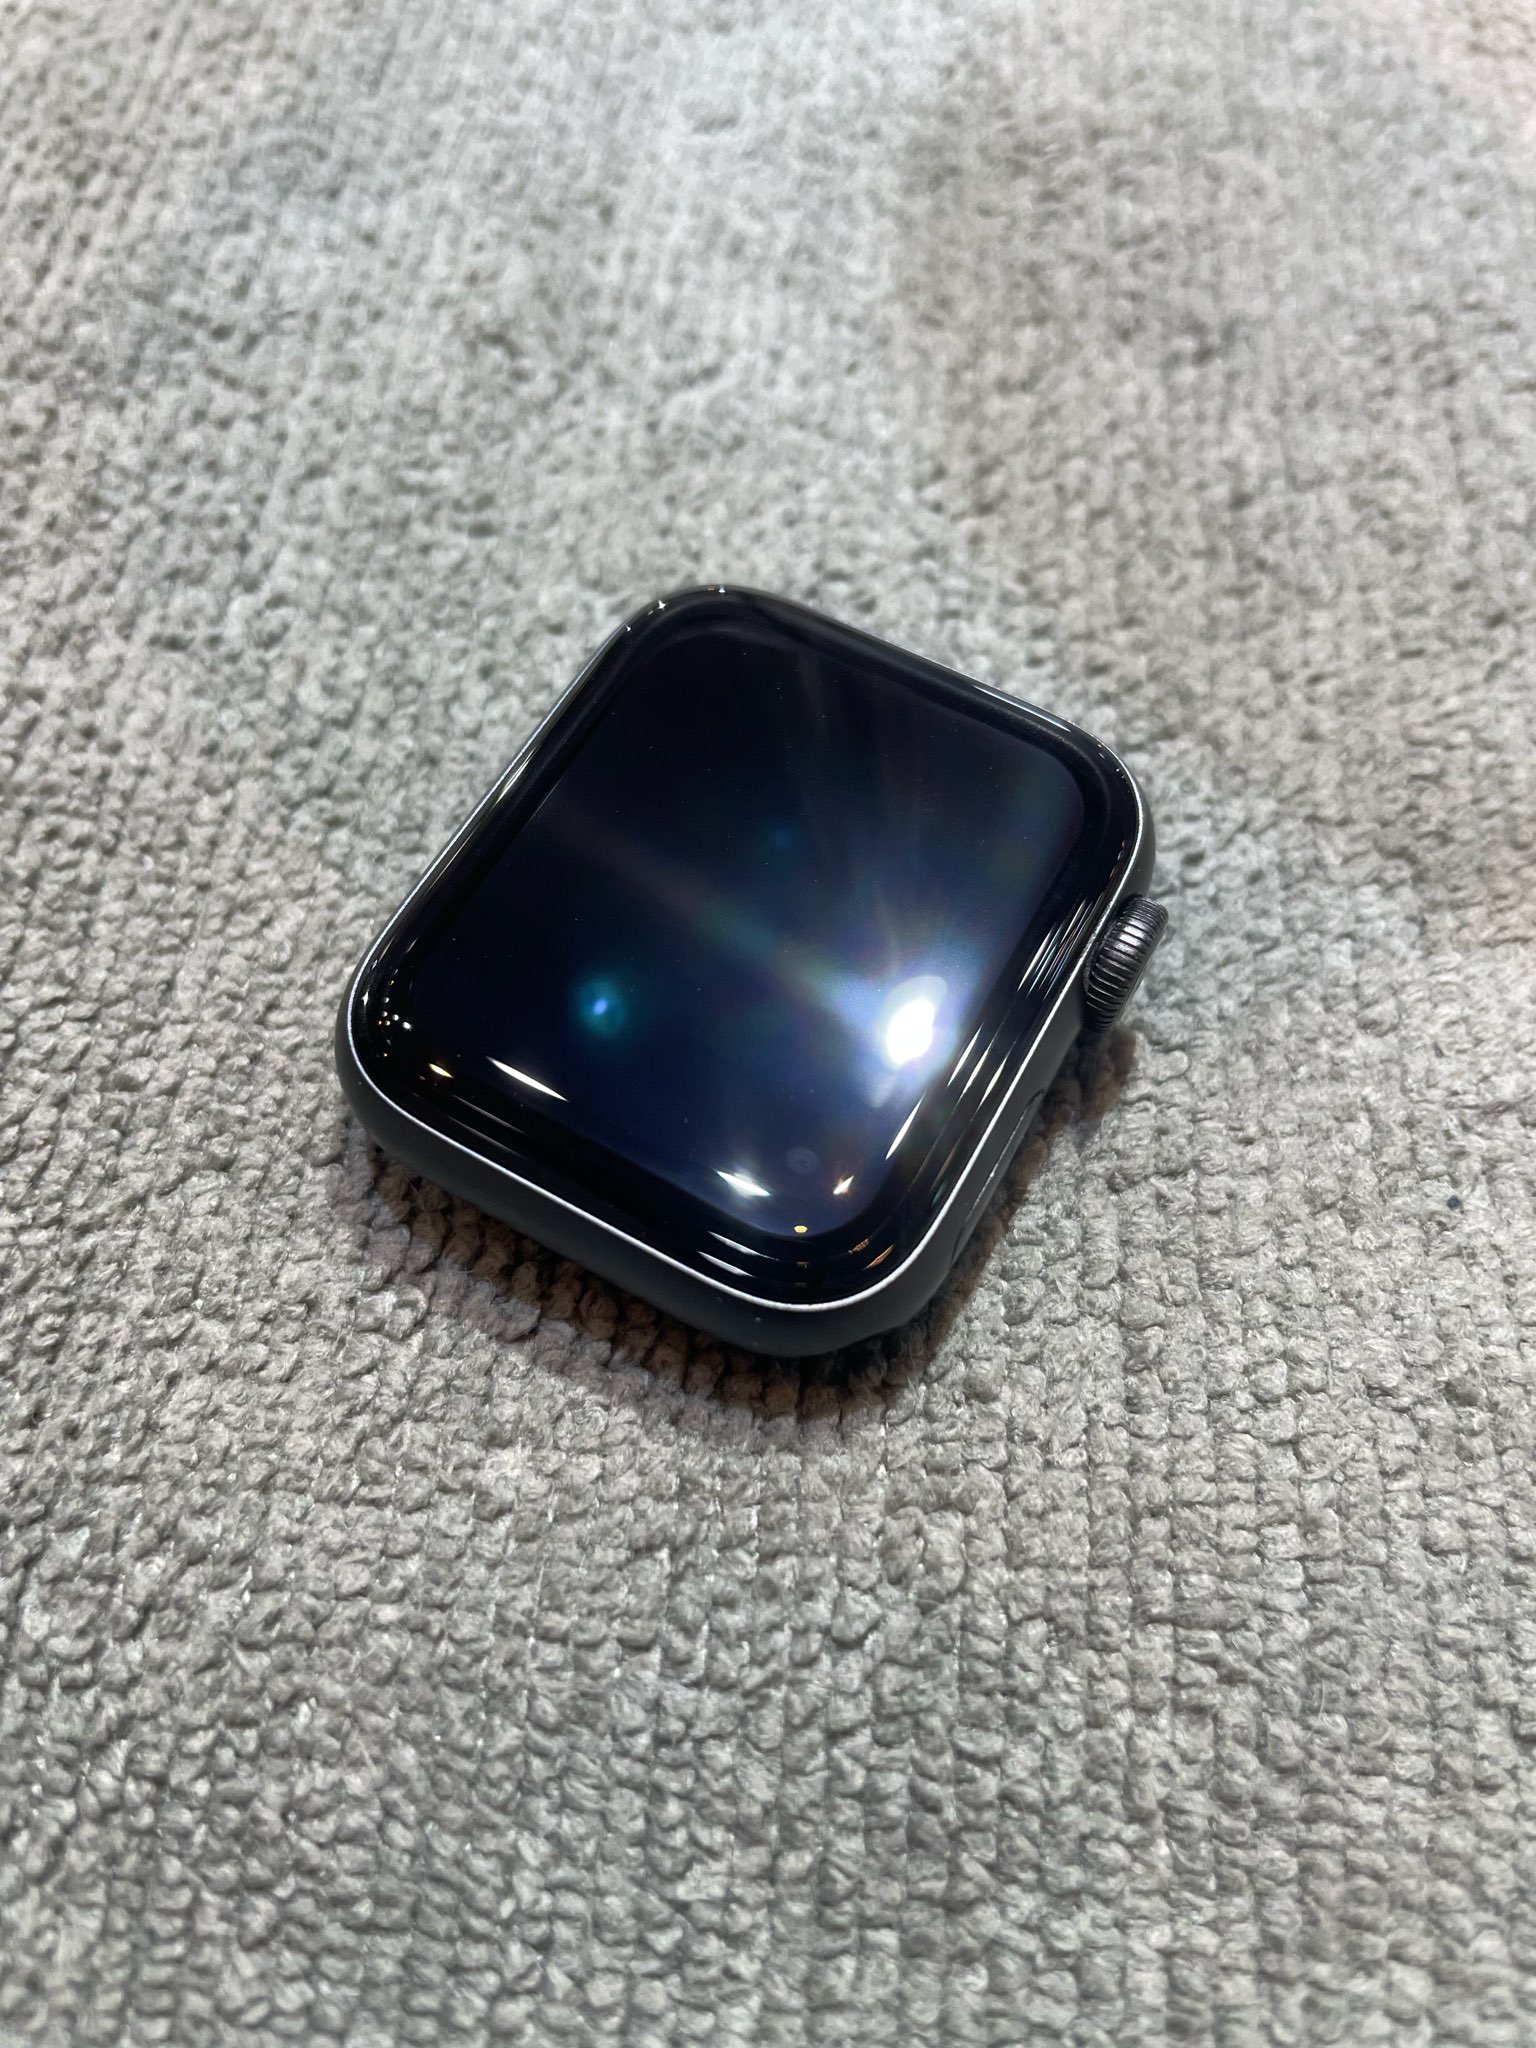 Apple Watchの保護にはガラスコーティングがオススメ！最短10分施工可能！兵庫県伊丹市より施工にお持ち込み頂きました♪